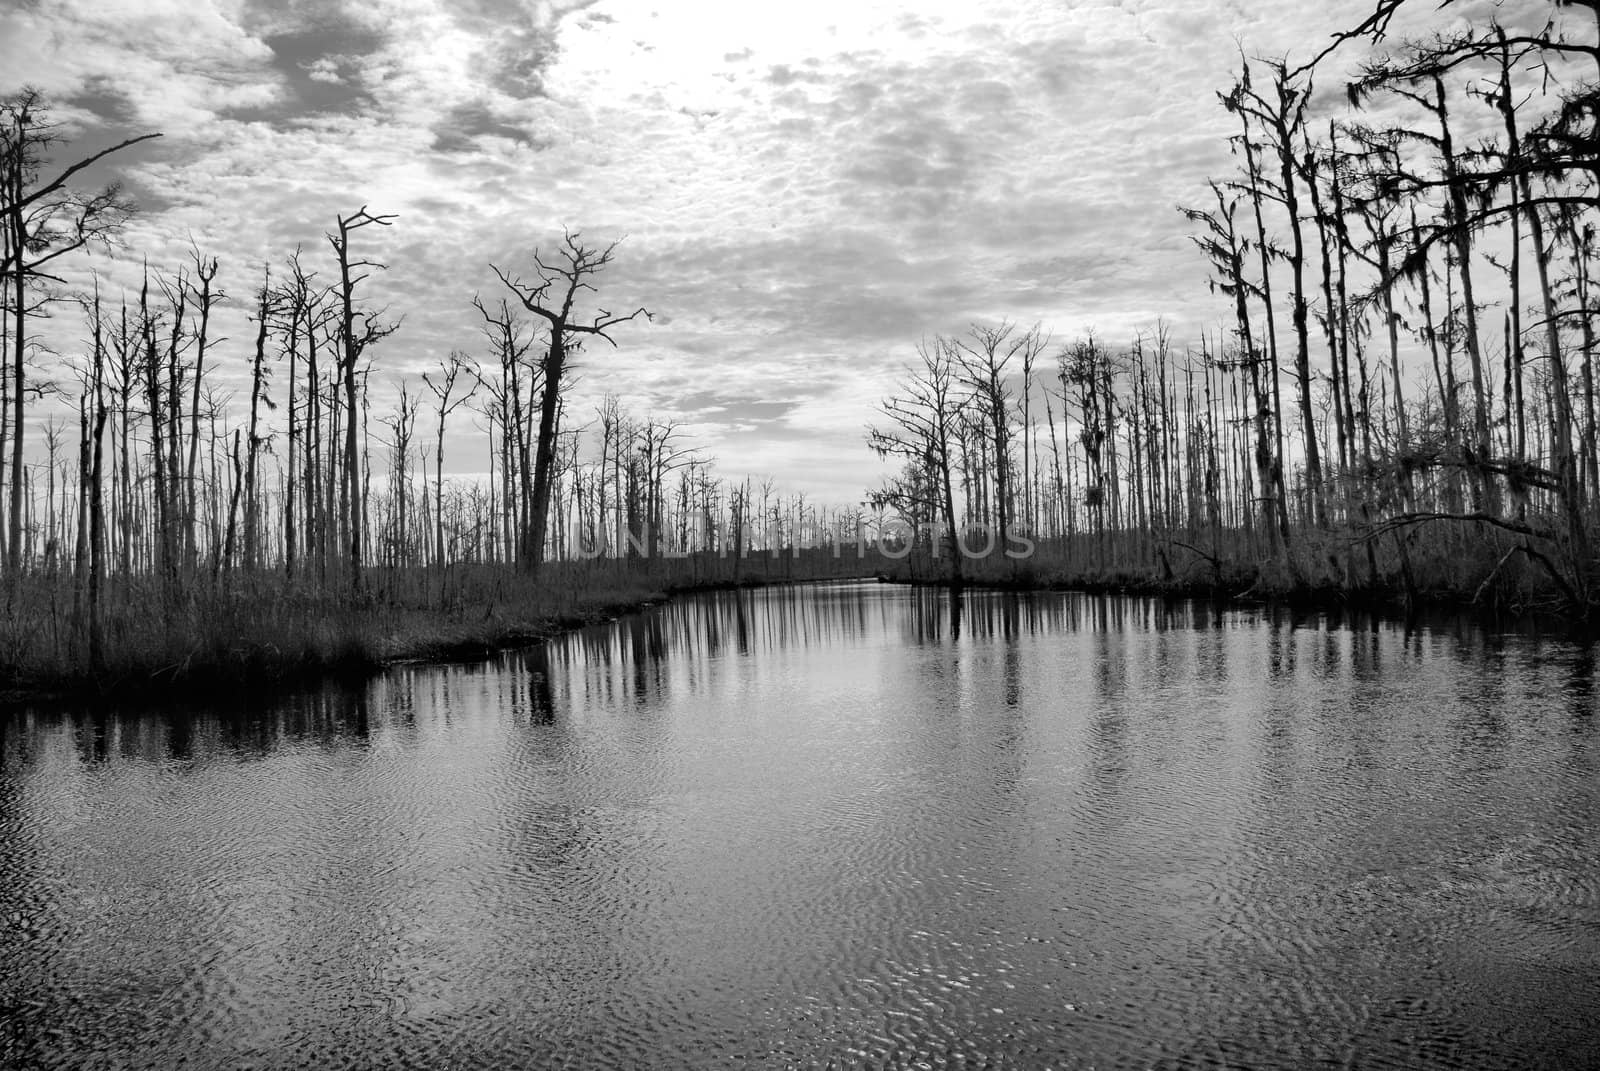 Swamp by northwoodsphoto